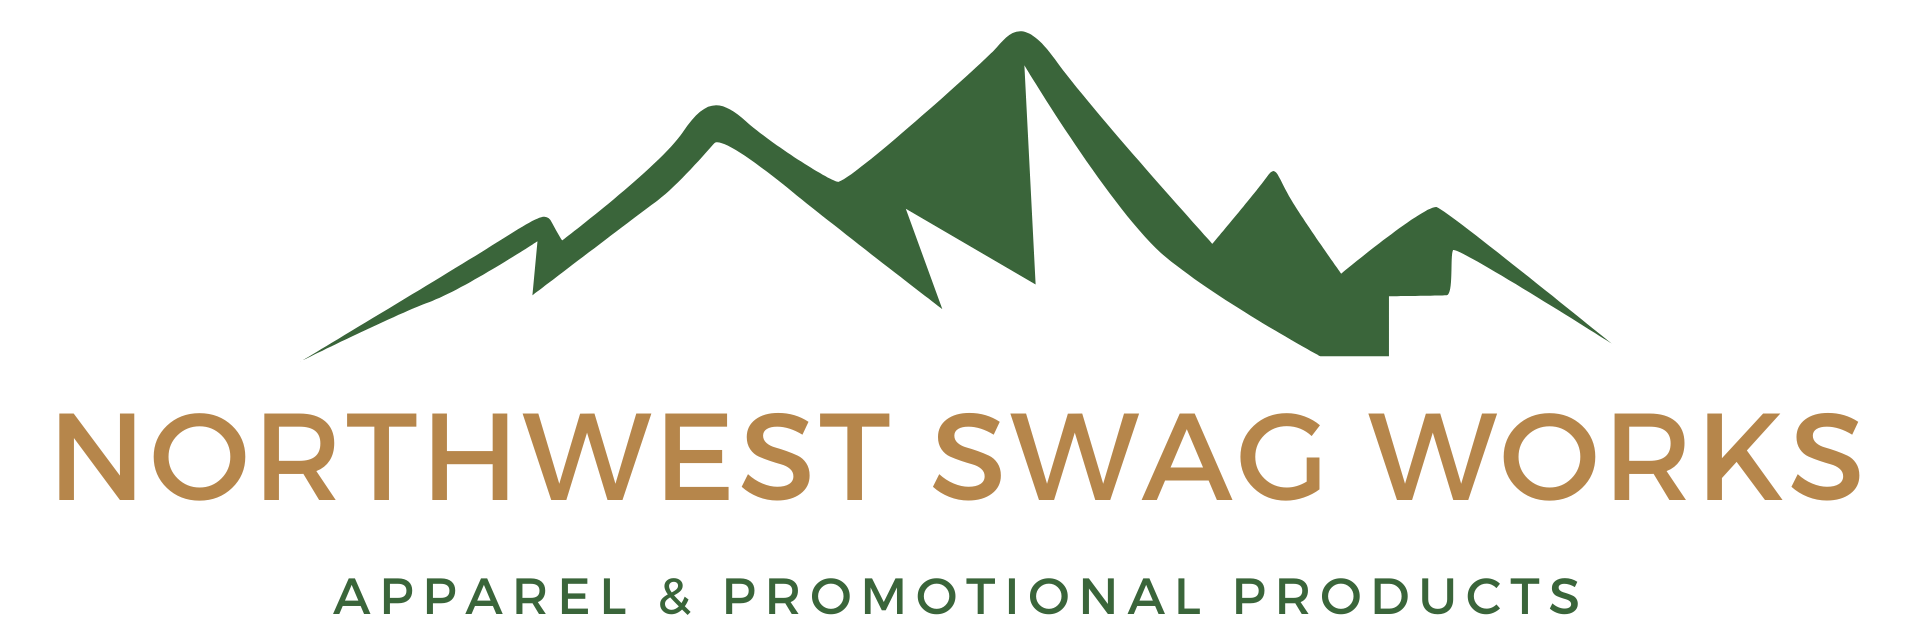 Northwest Swag Works's Logo